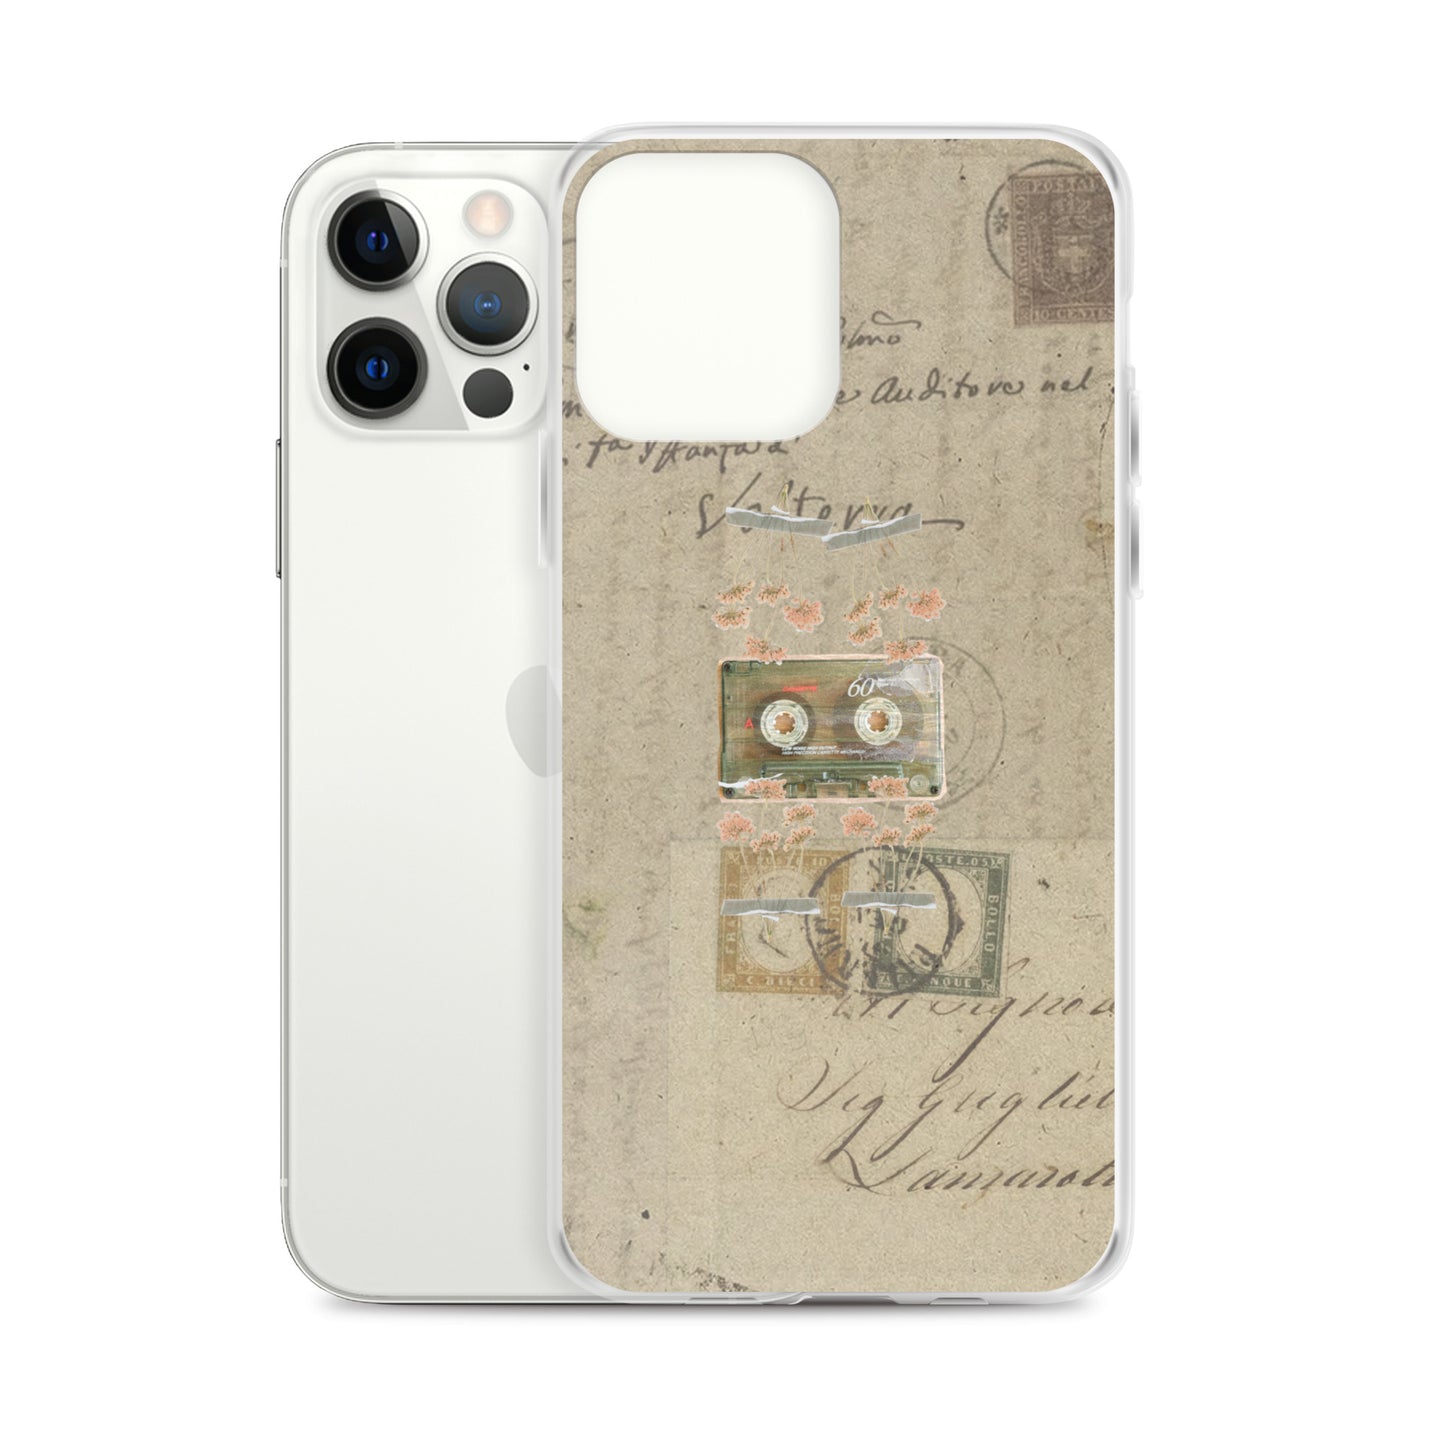 Vintage Tape iPhone Case